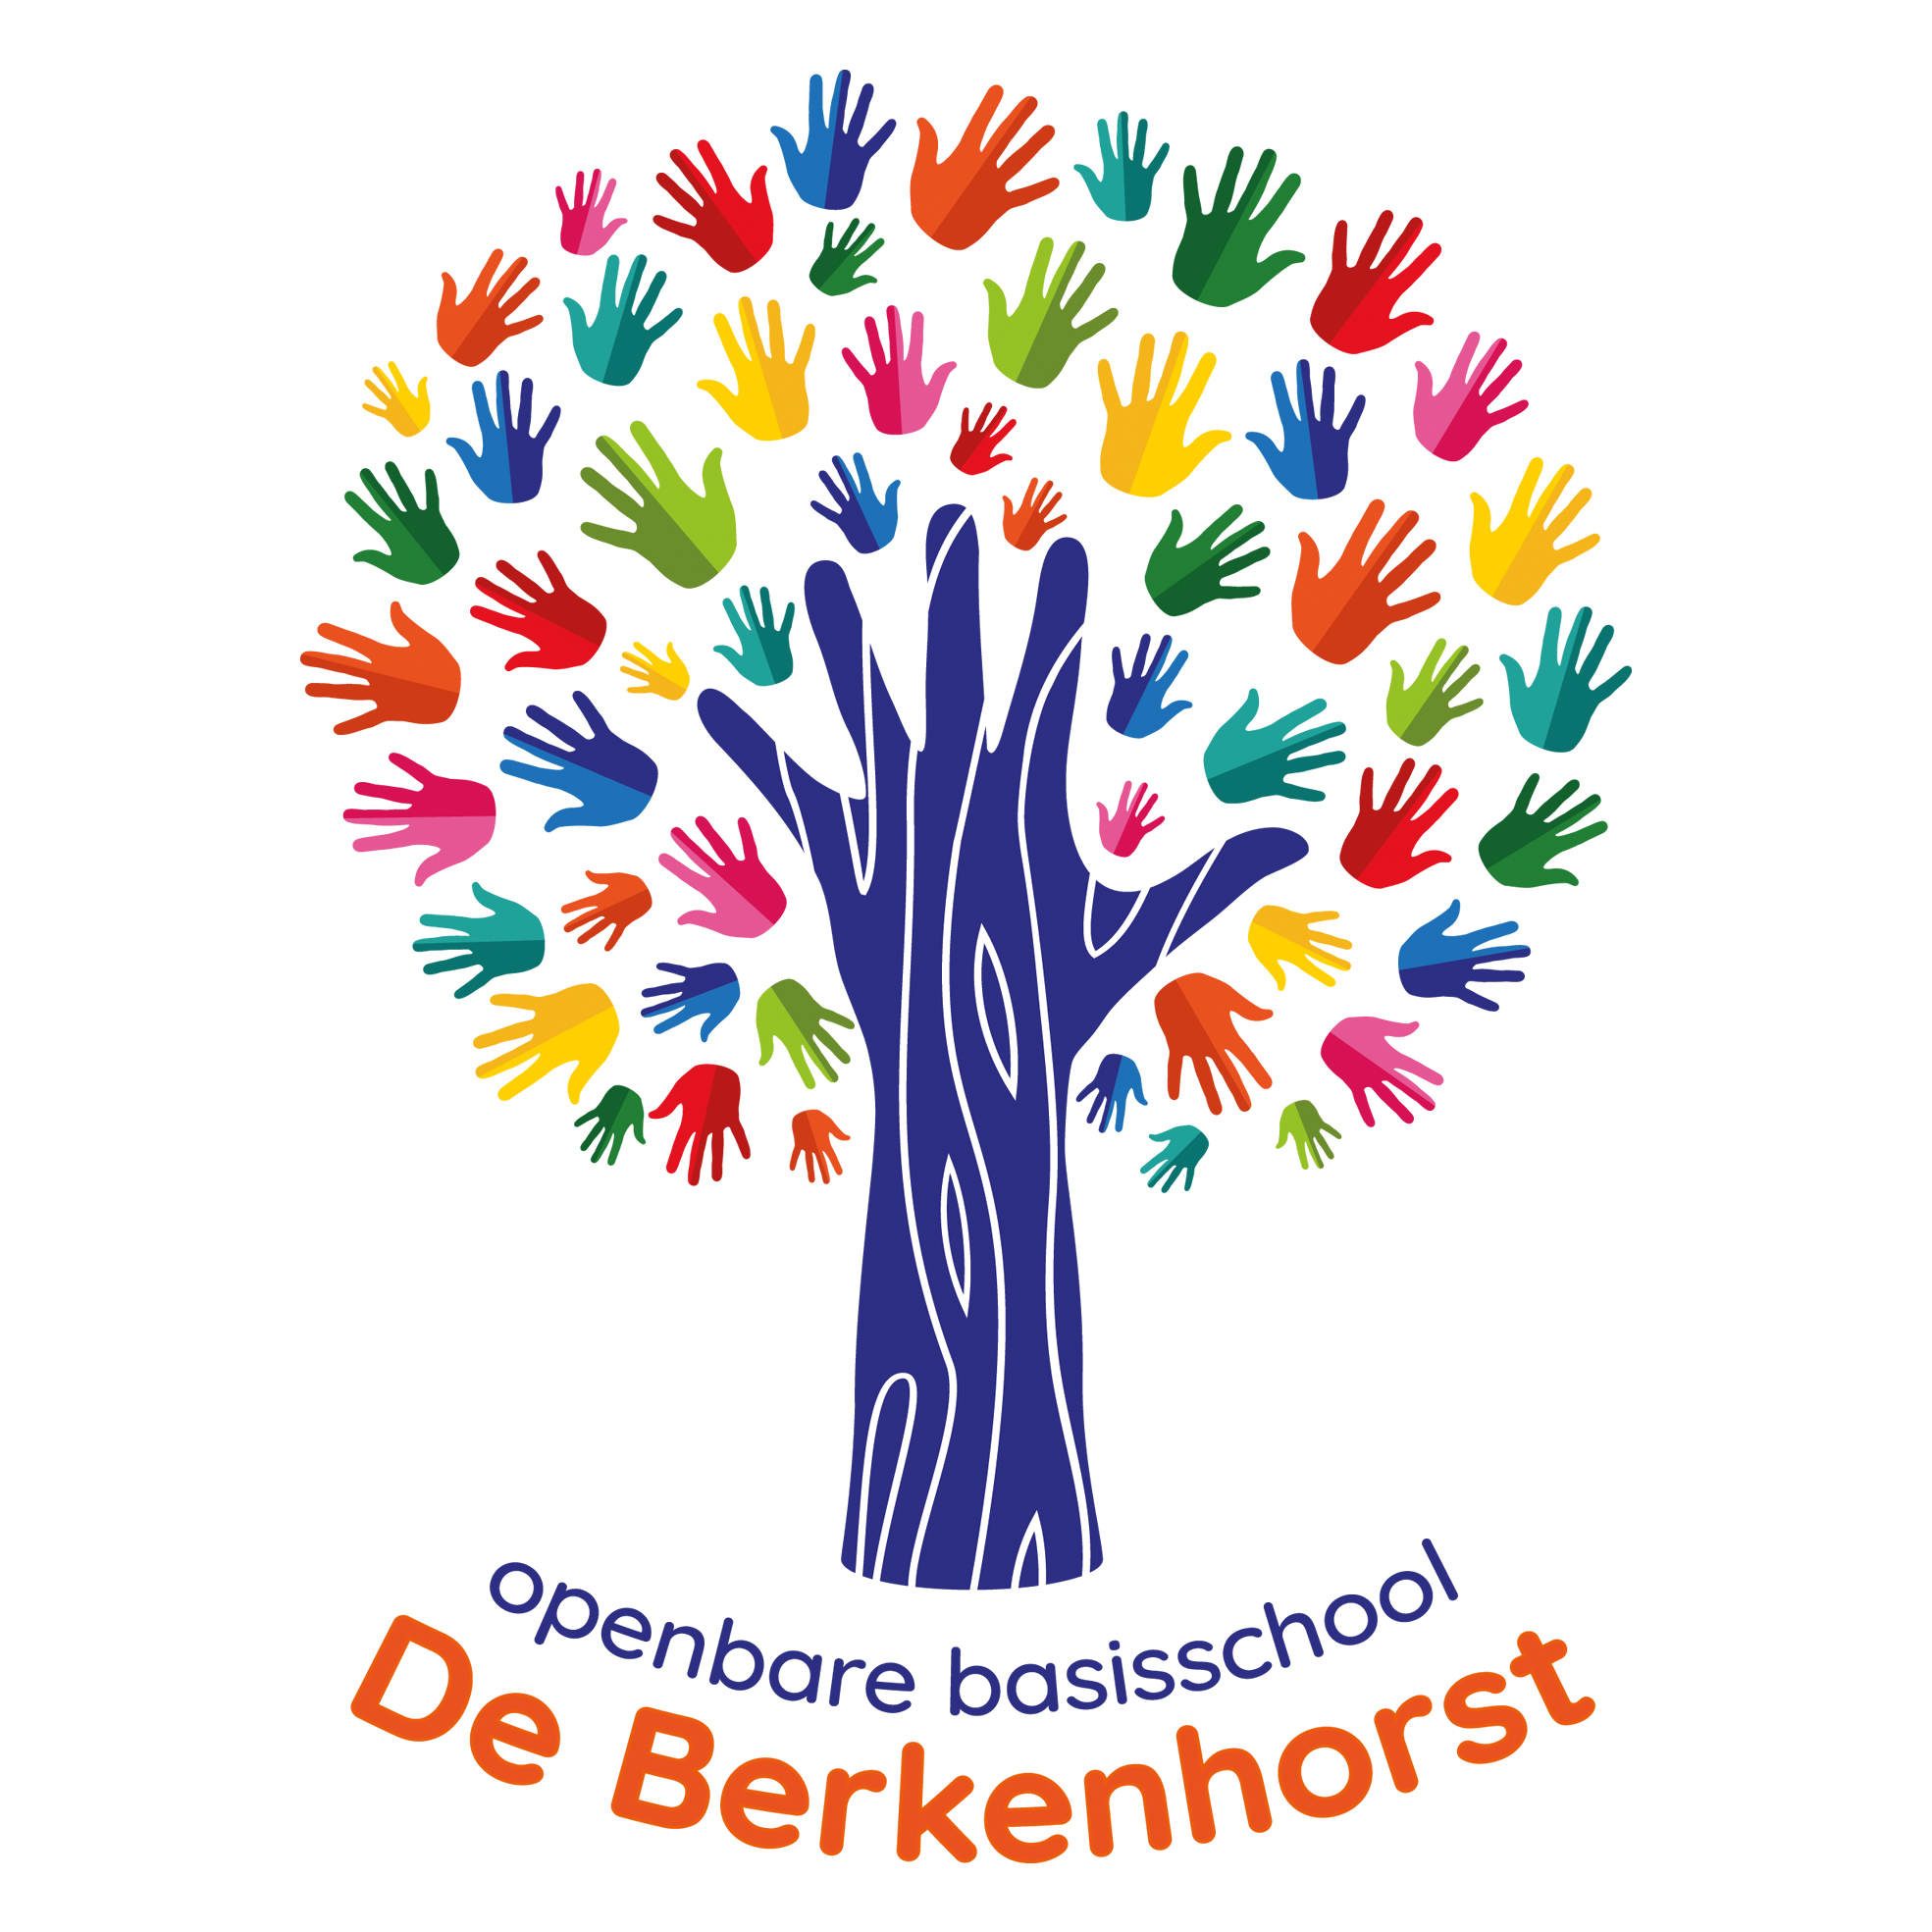 obs De Berkenhorst logo